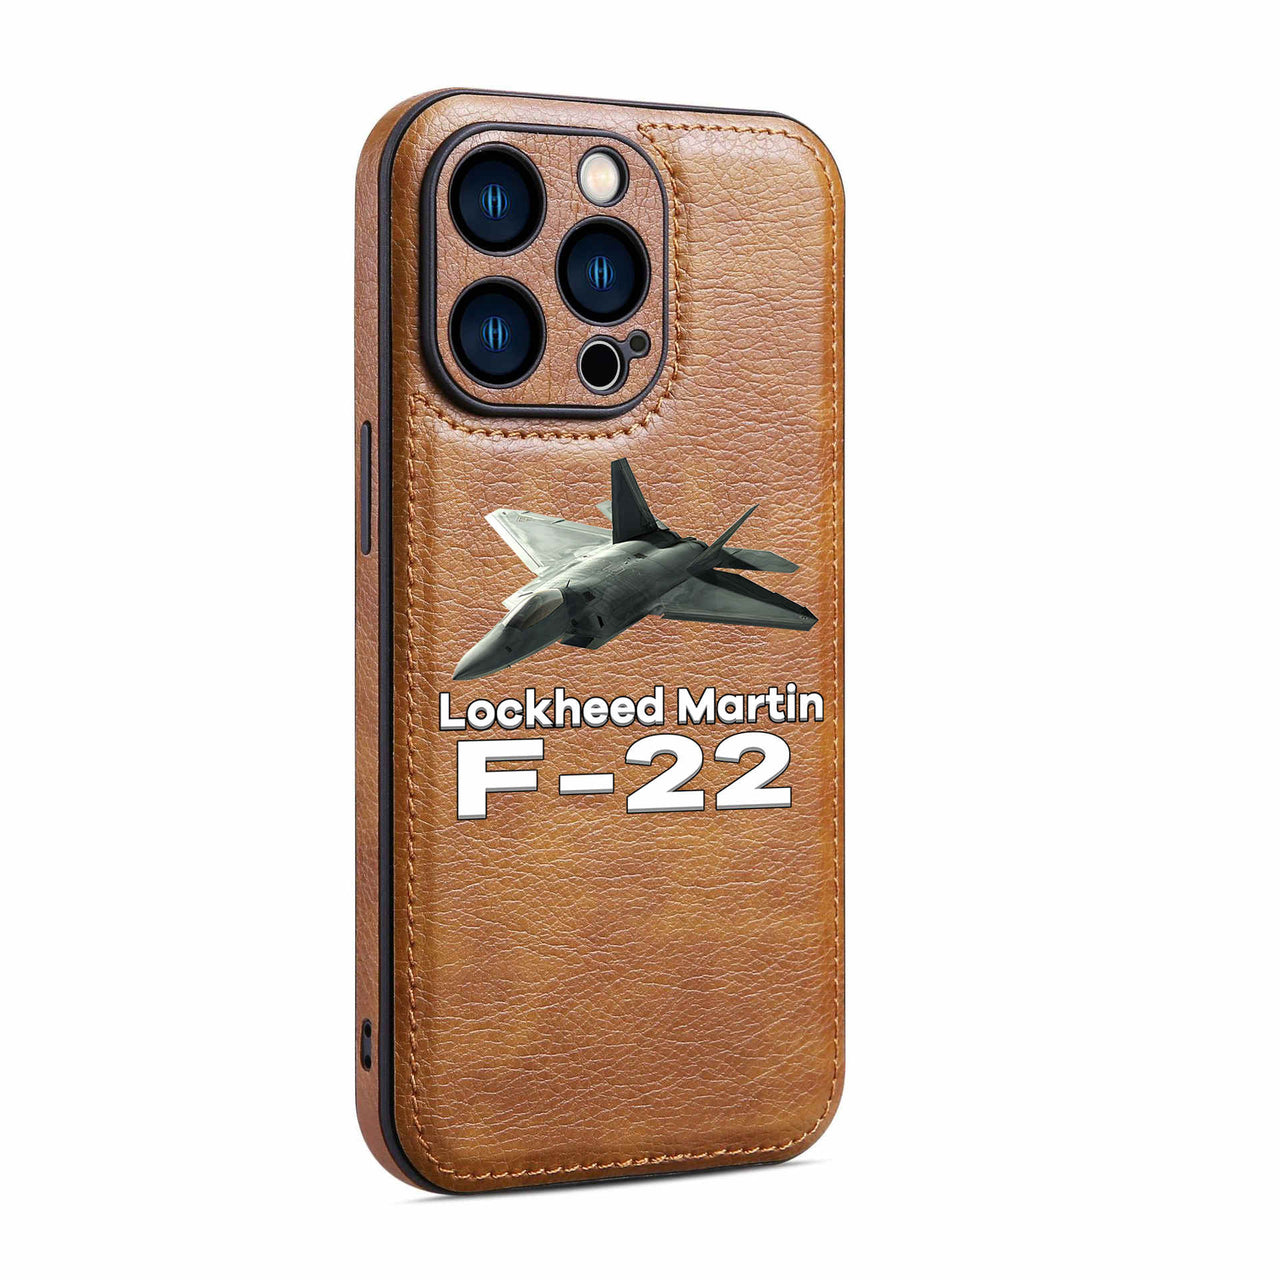 The Lockheed Martin F22 Designed Leather iPhone Cases